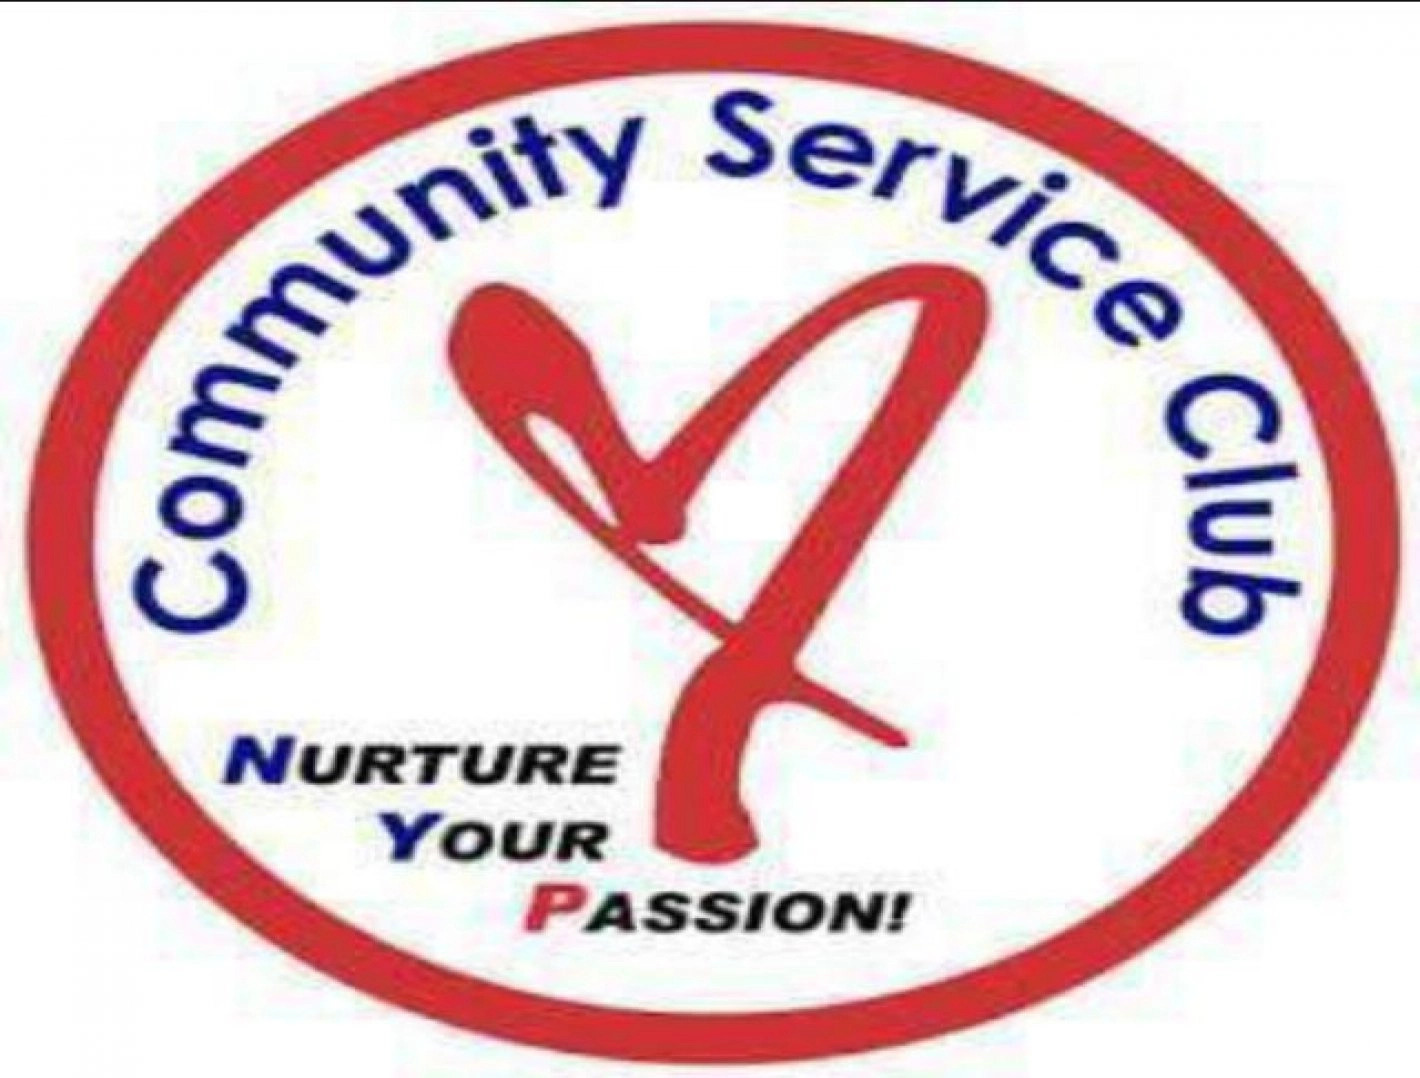 BIT Community Service Club